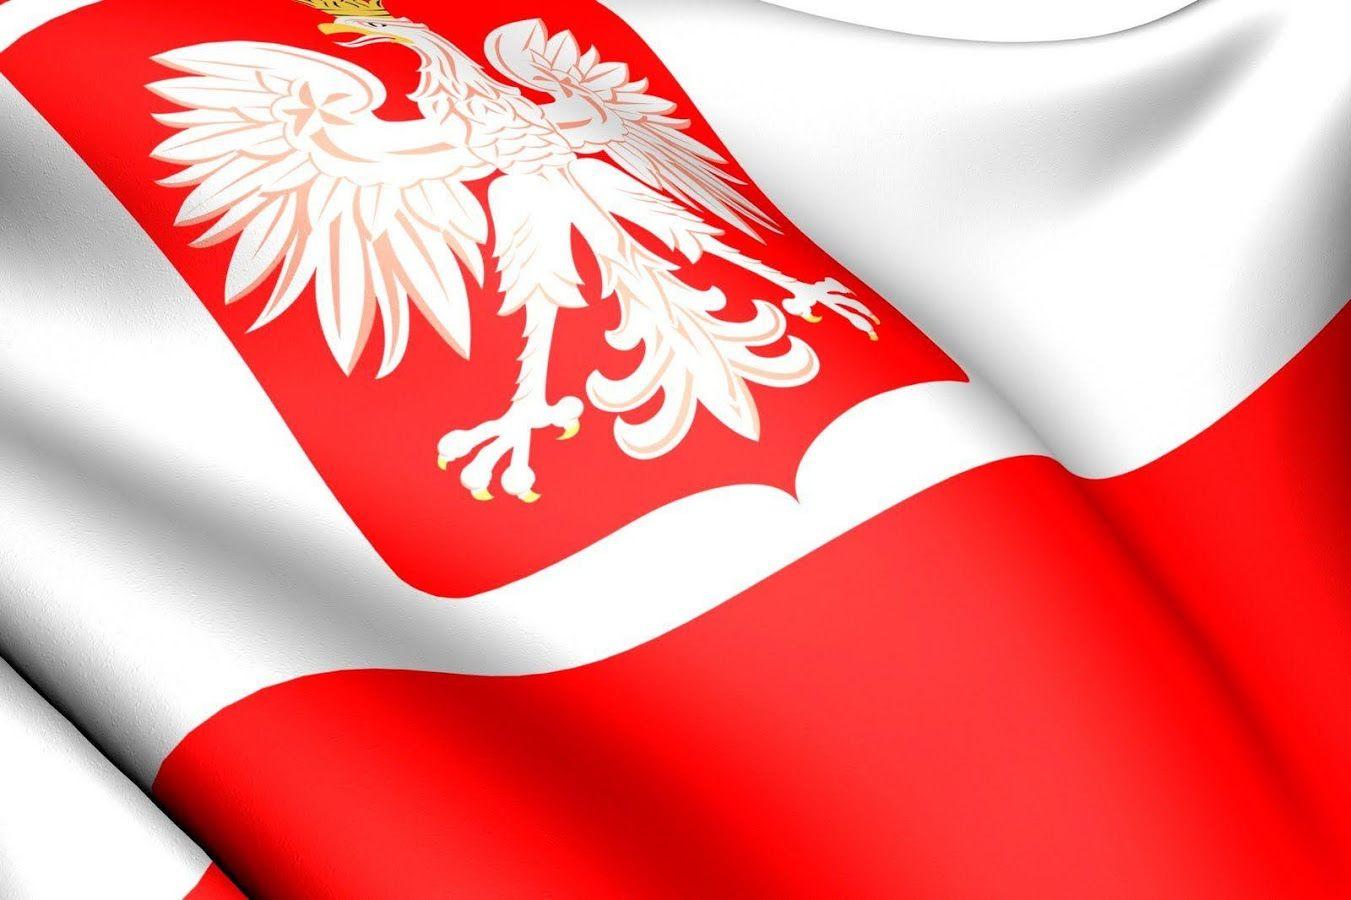 Poland Flag Wallpaper Apps on Google Play